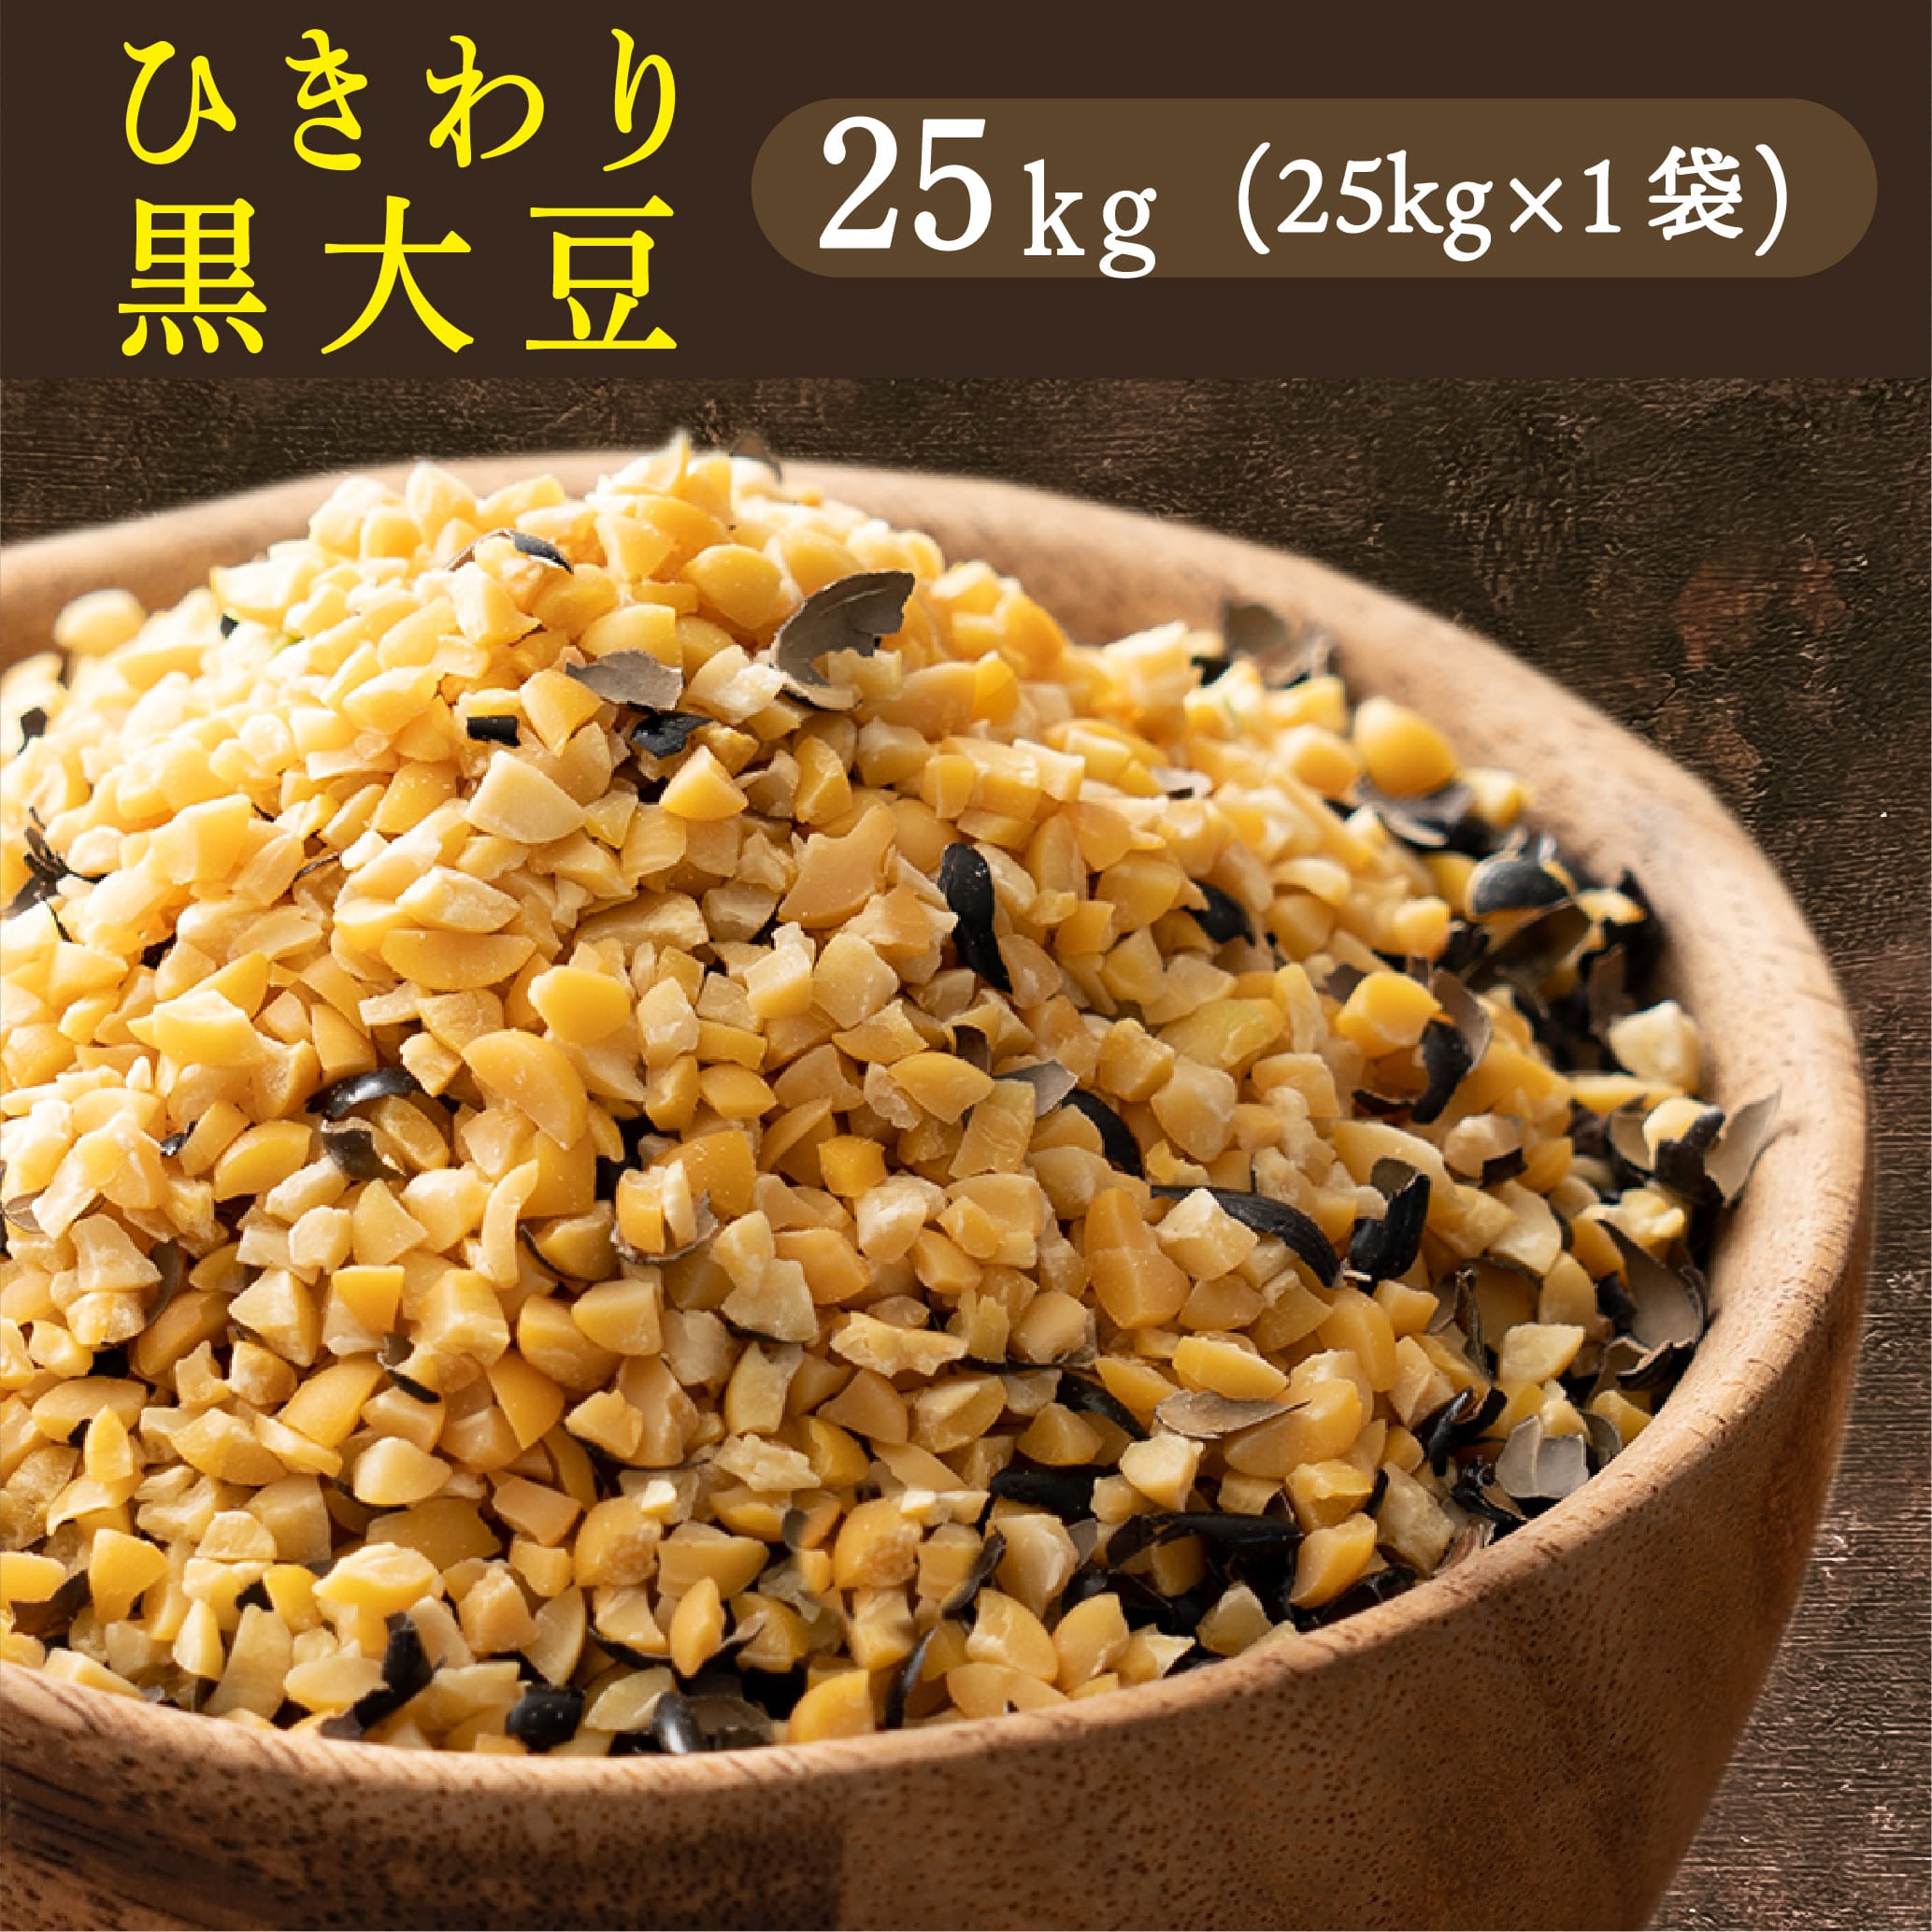 25kg(25kg×1袋)】国産 ひきわり黒大豆 業務用サイズ 黒大豆が食べ